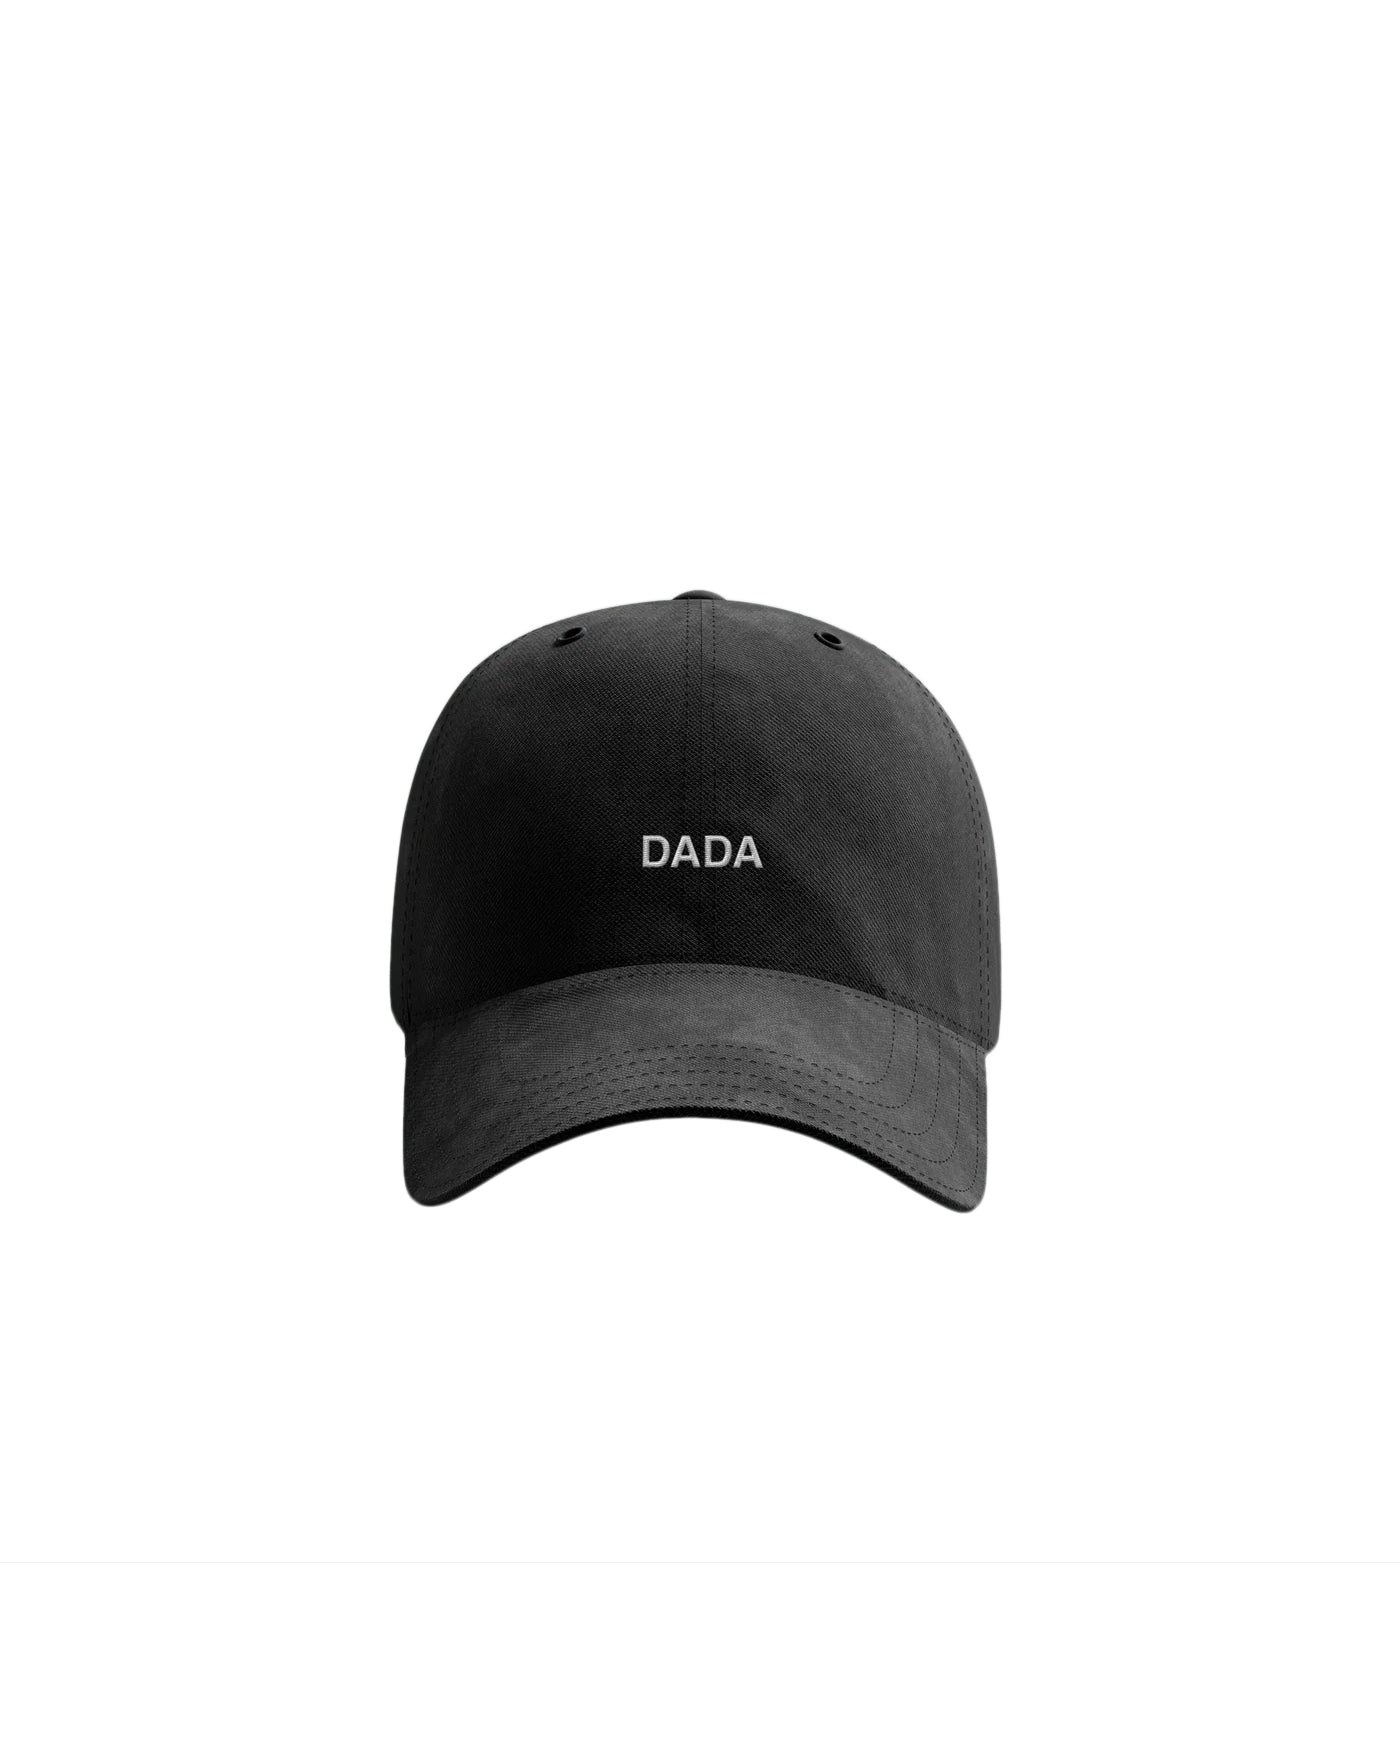 Dada Dad Hat